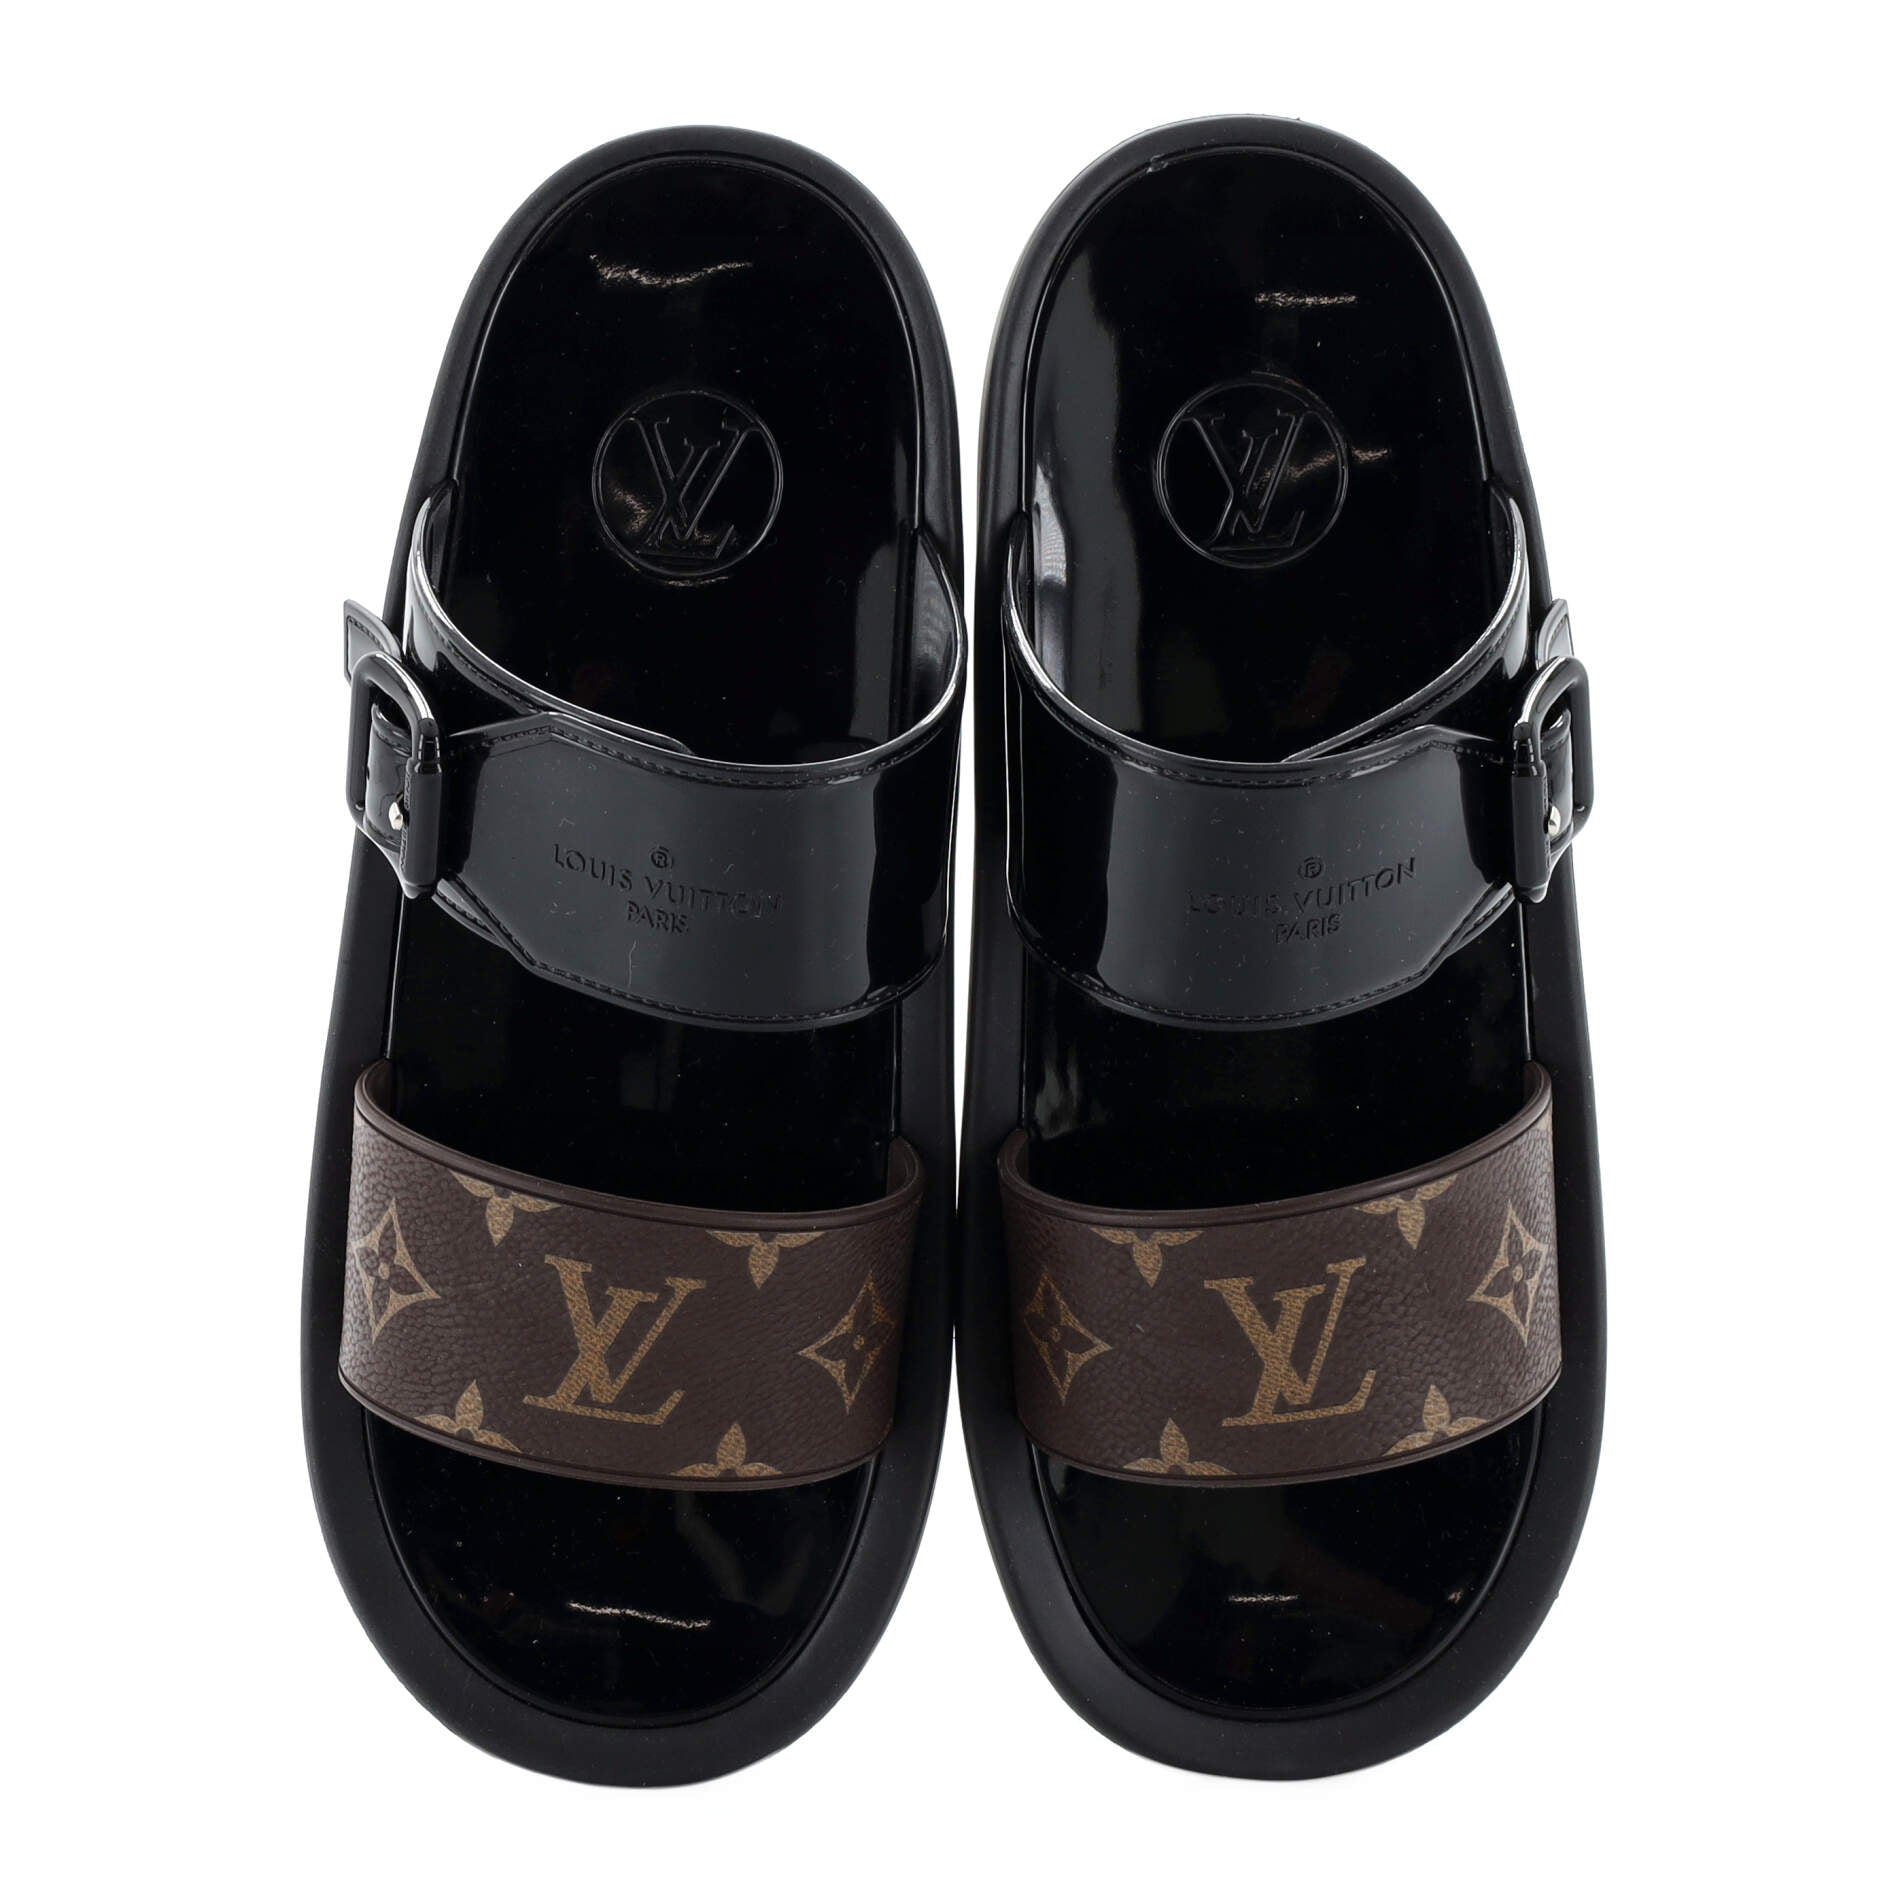 Louis Vuitton Women's Revival Mule Sandals Monogram Embossed Leather